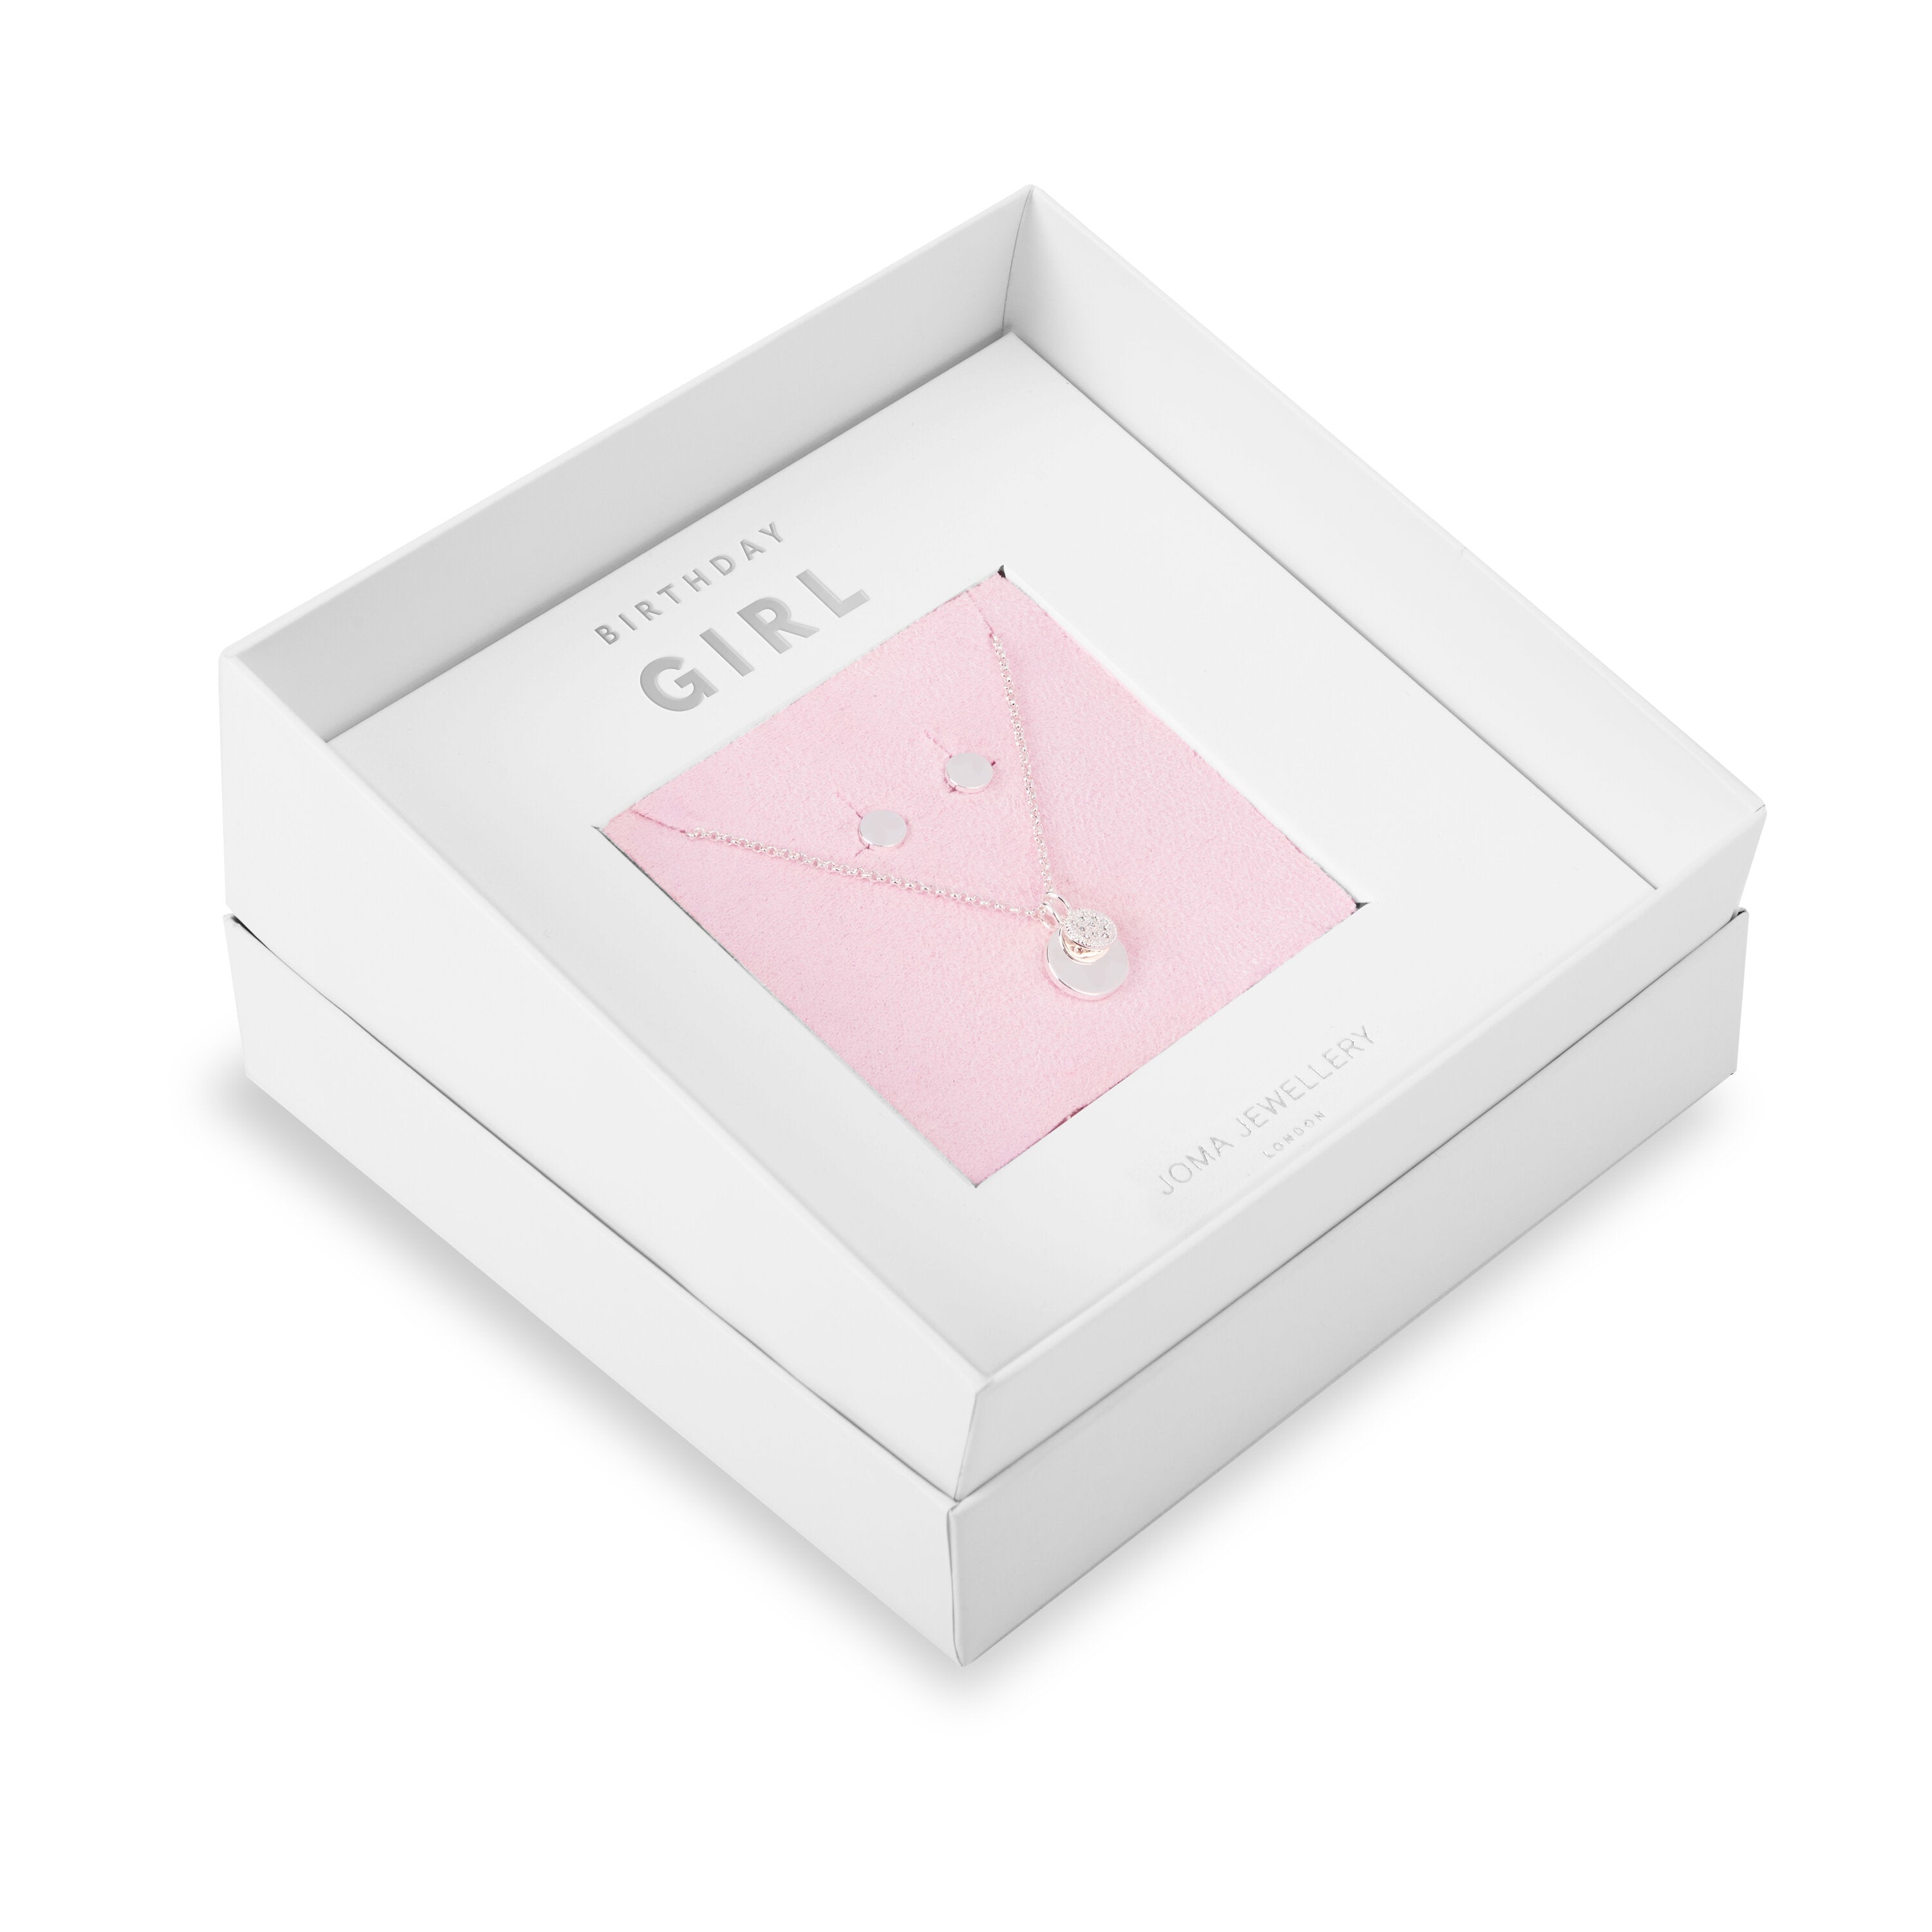 Joma Jewellery Birthday Girl Necklace & Earring Gift Box